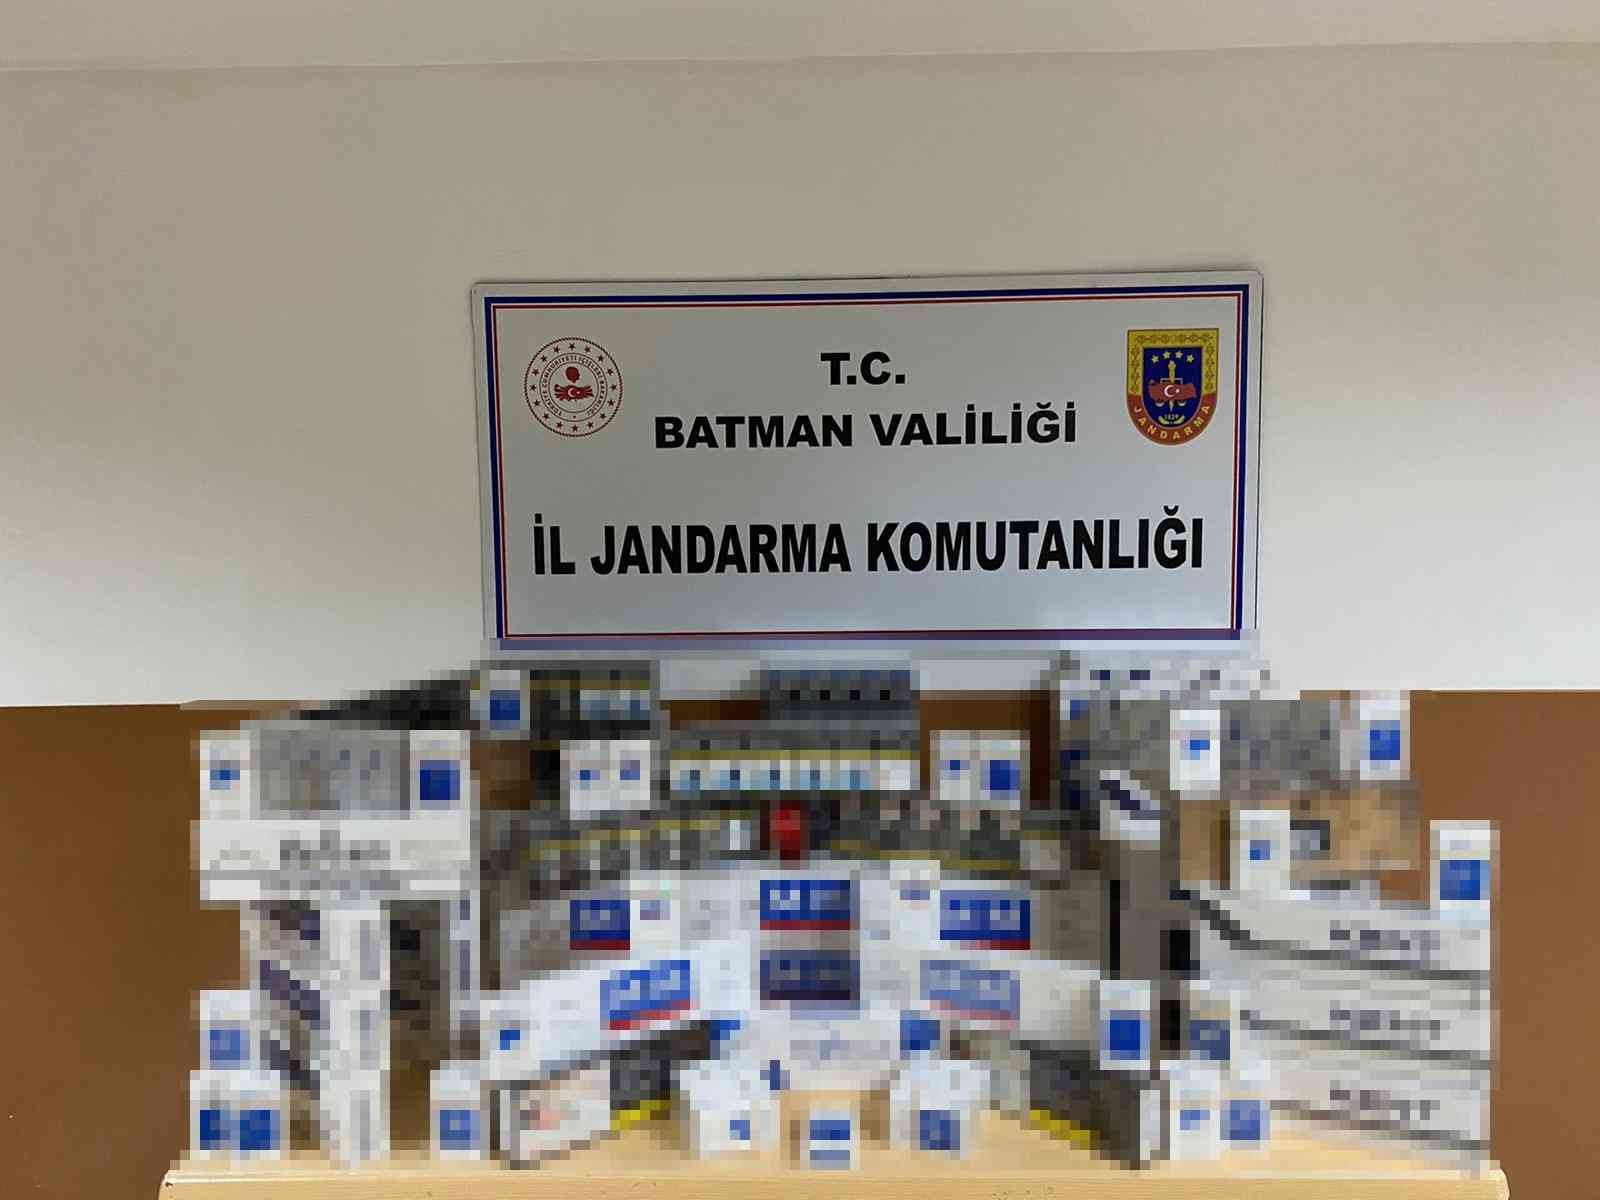 Batman’da bin 162 paket kaçak sigara ele geçirdi #batman